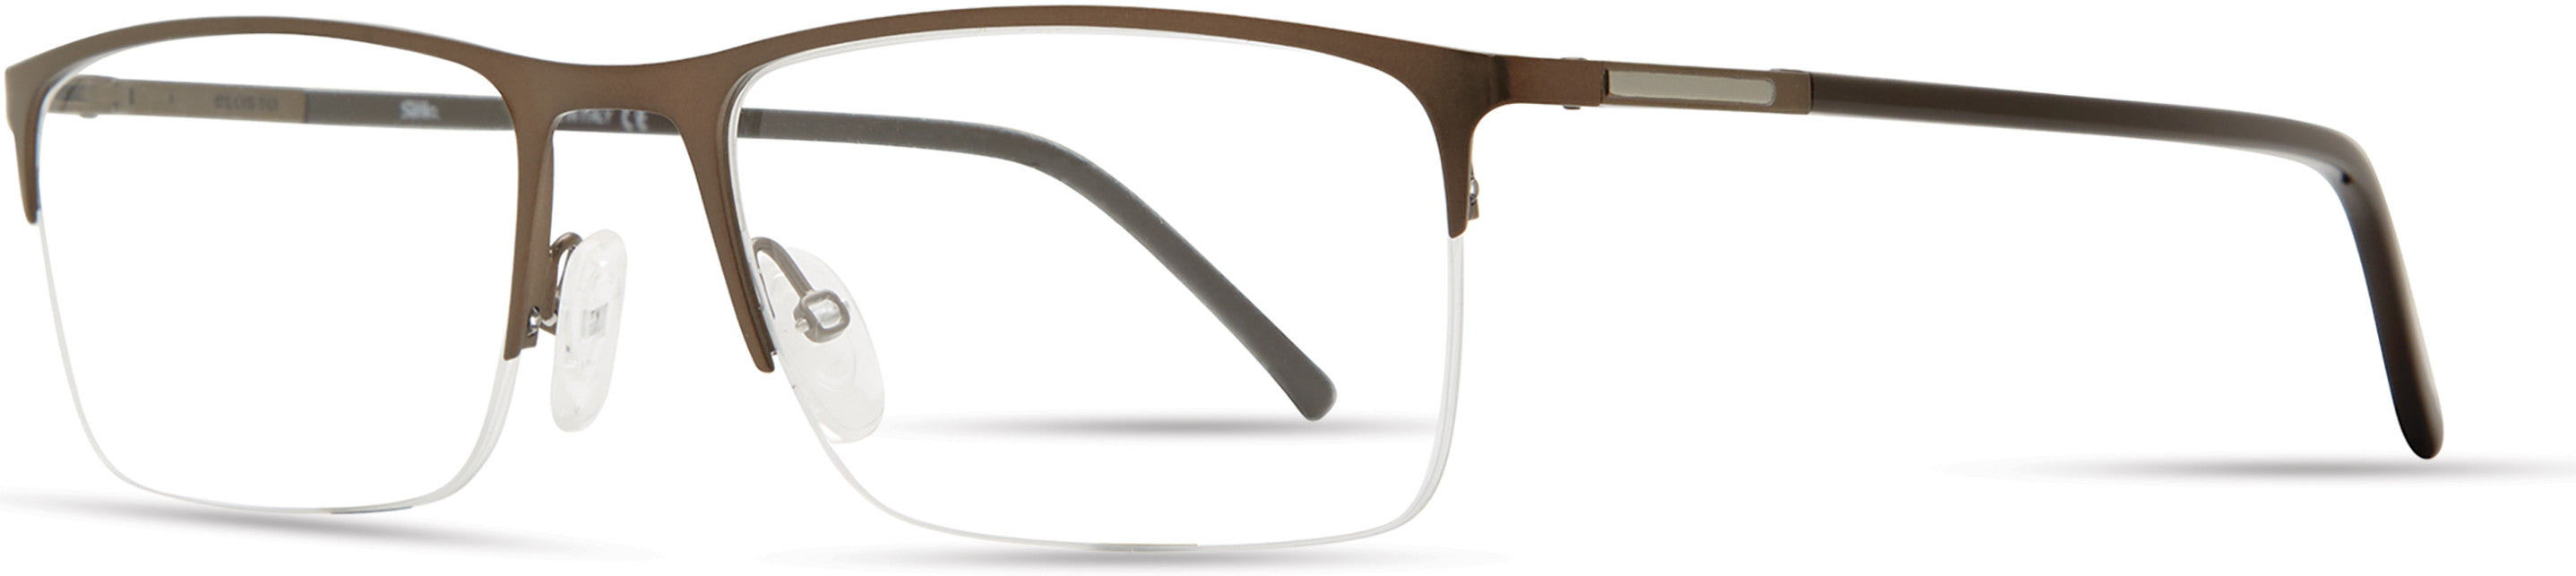  Elasta 7233 Rectangular Eyeglasses 04IN-04IN  Matte Brown (00 Demo Lens)